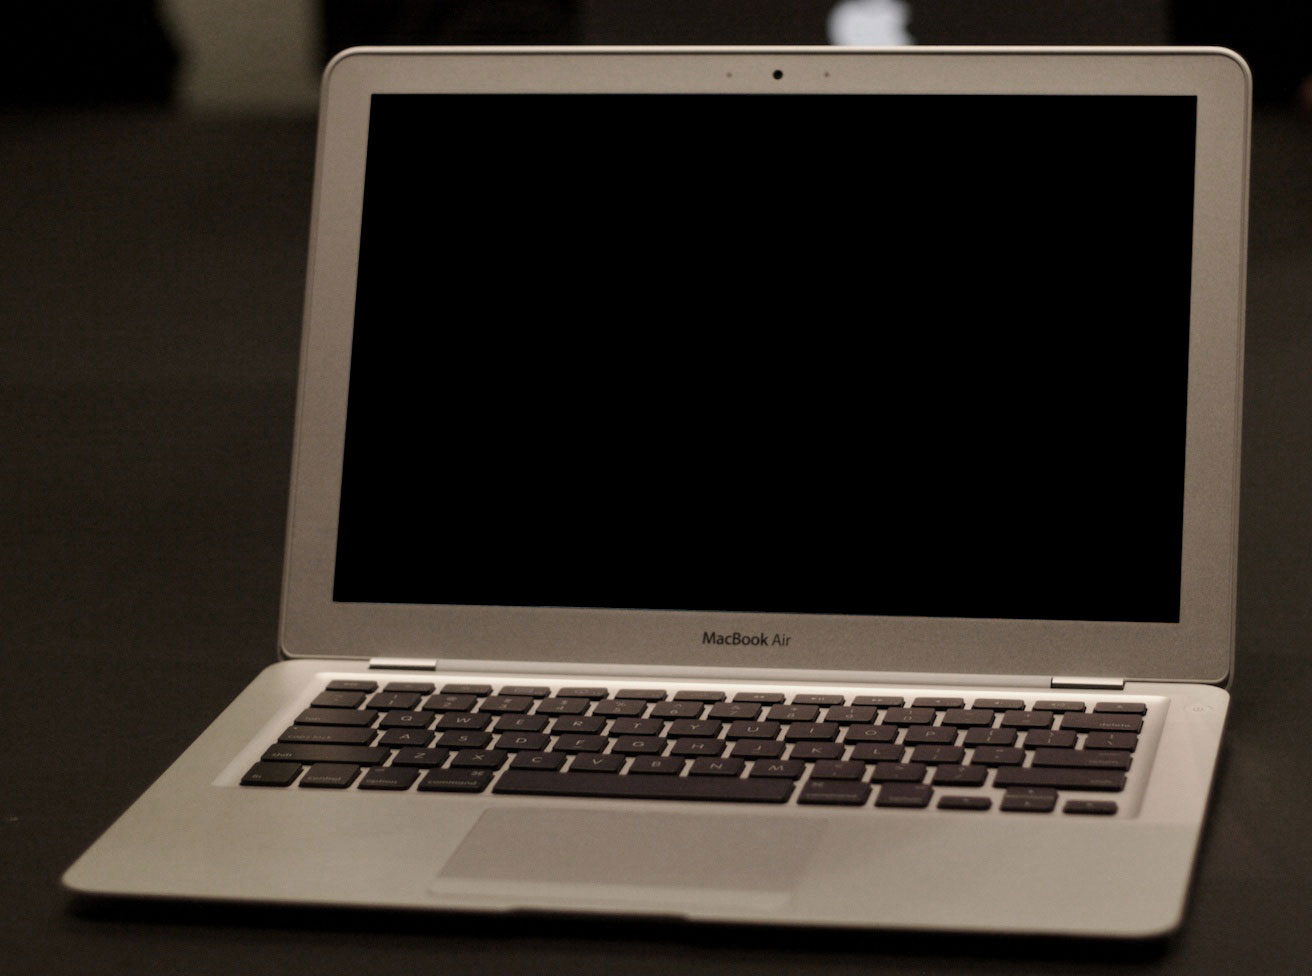 Mac air blank screen apple-macbook-air-11.6-laptop-intel-core-i5-dual-core-1.7ghz--711